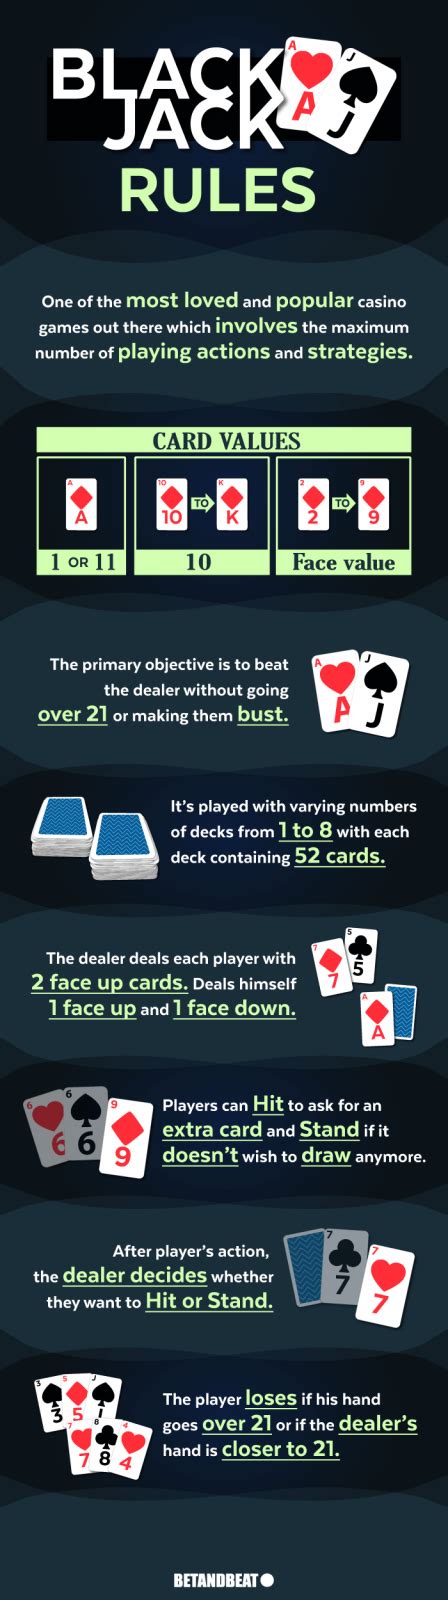 blackjack deck rules fetb canada